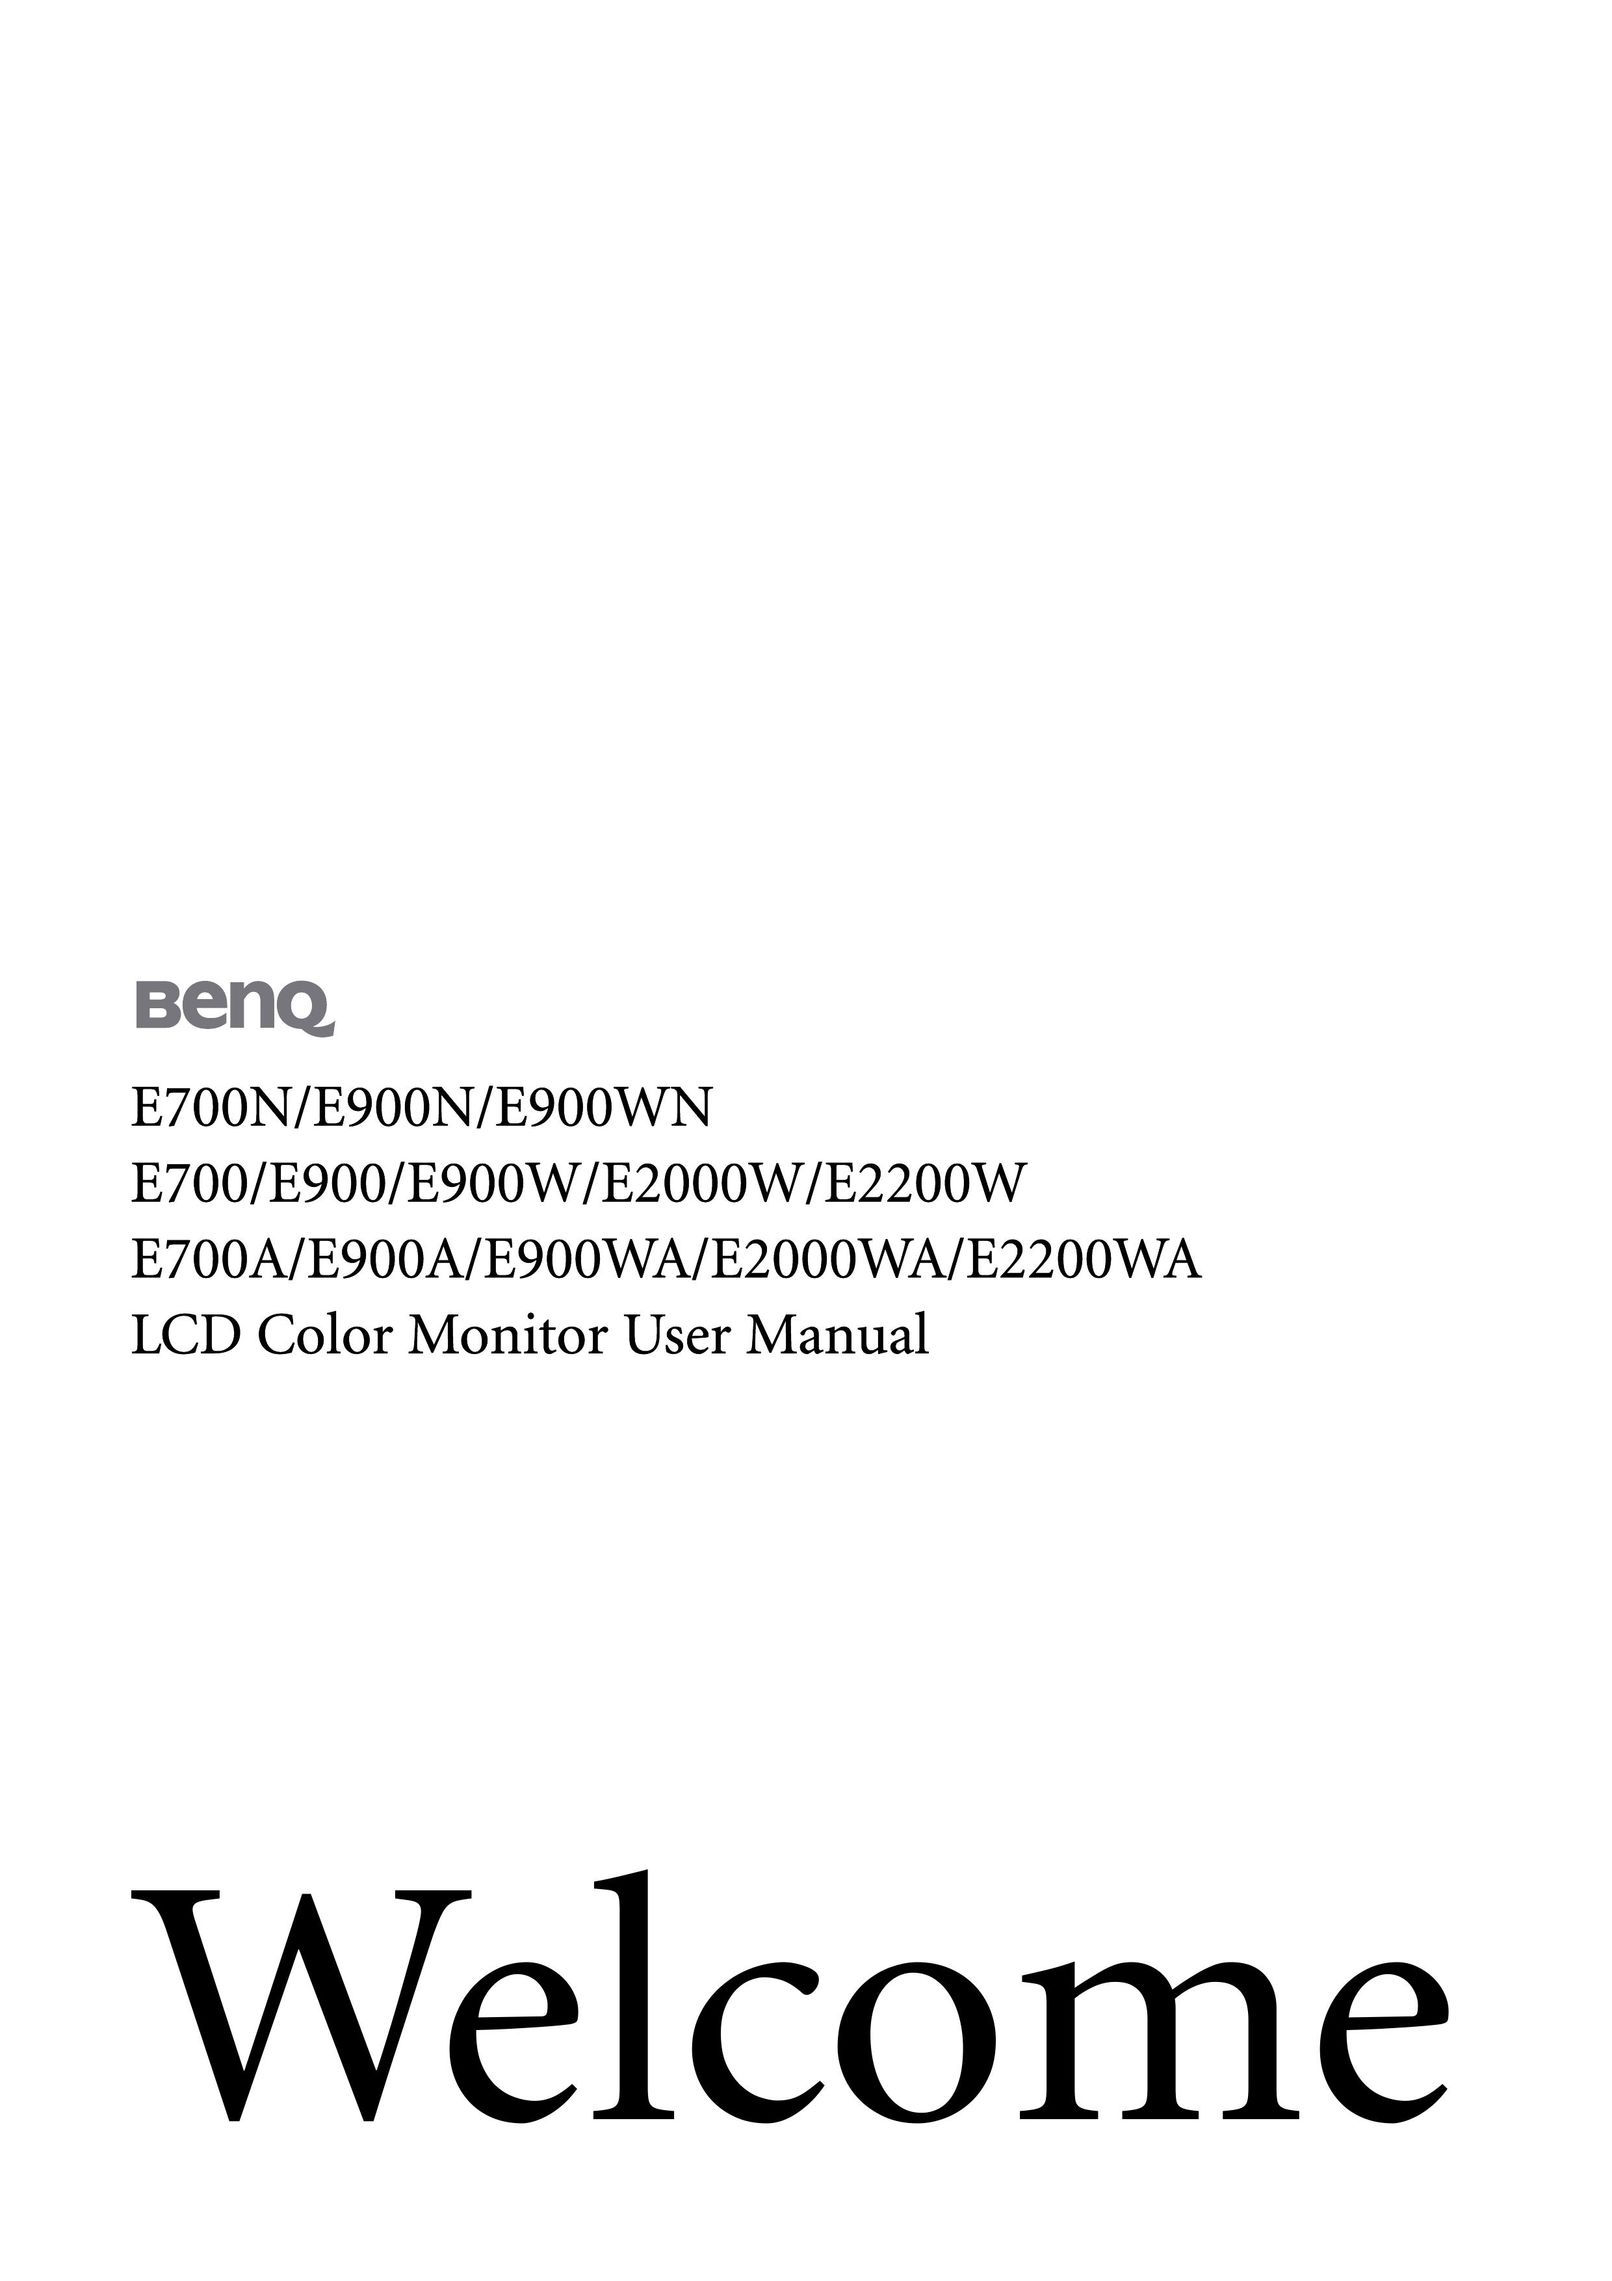 BenQ E2000WA Computer Monitor User Manual (Page 1)